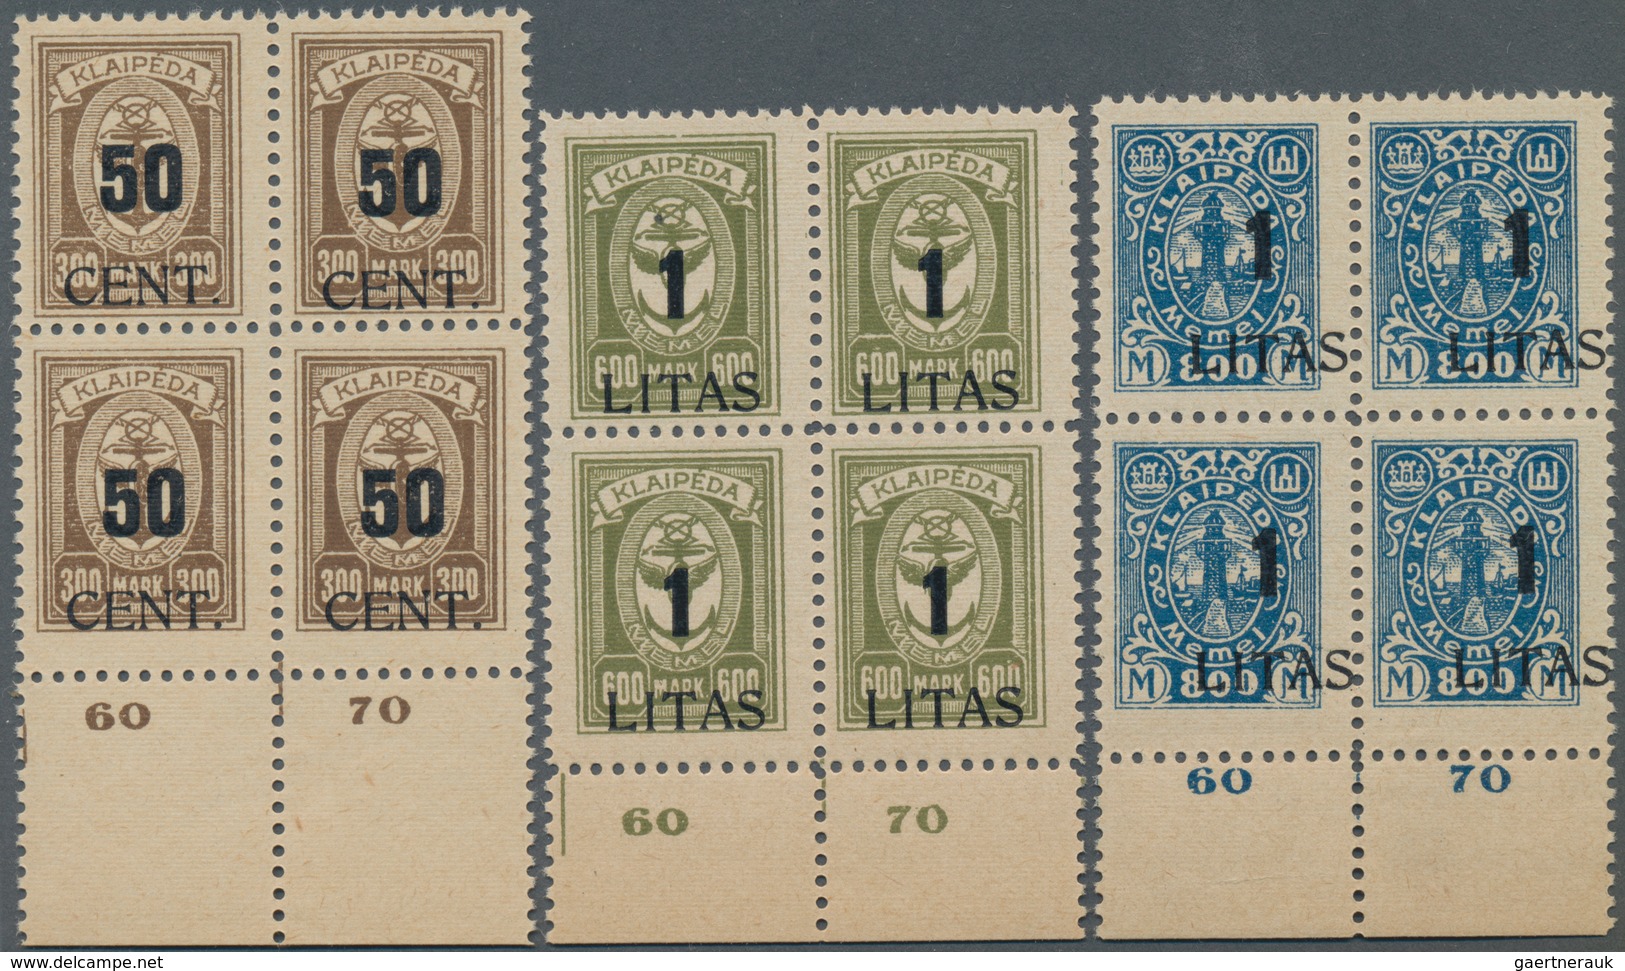 Memel: 1923, Angliederung des Memellandes an Litauen, unsignierter postfrischer Luxusviererblock-Sat